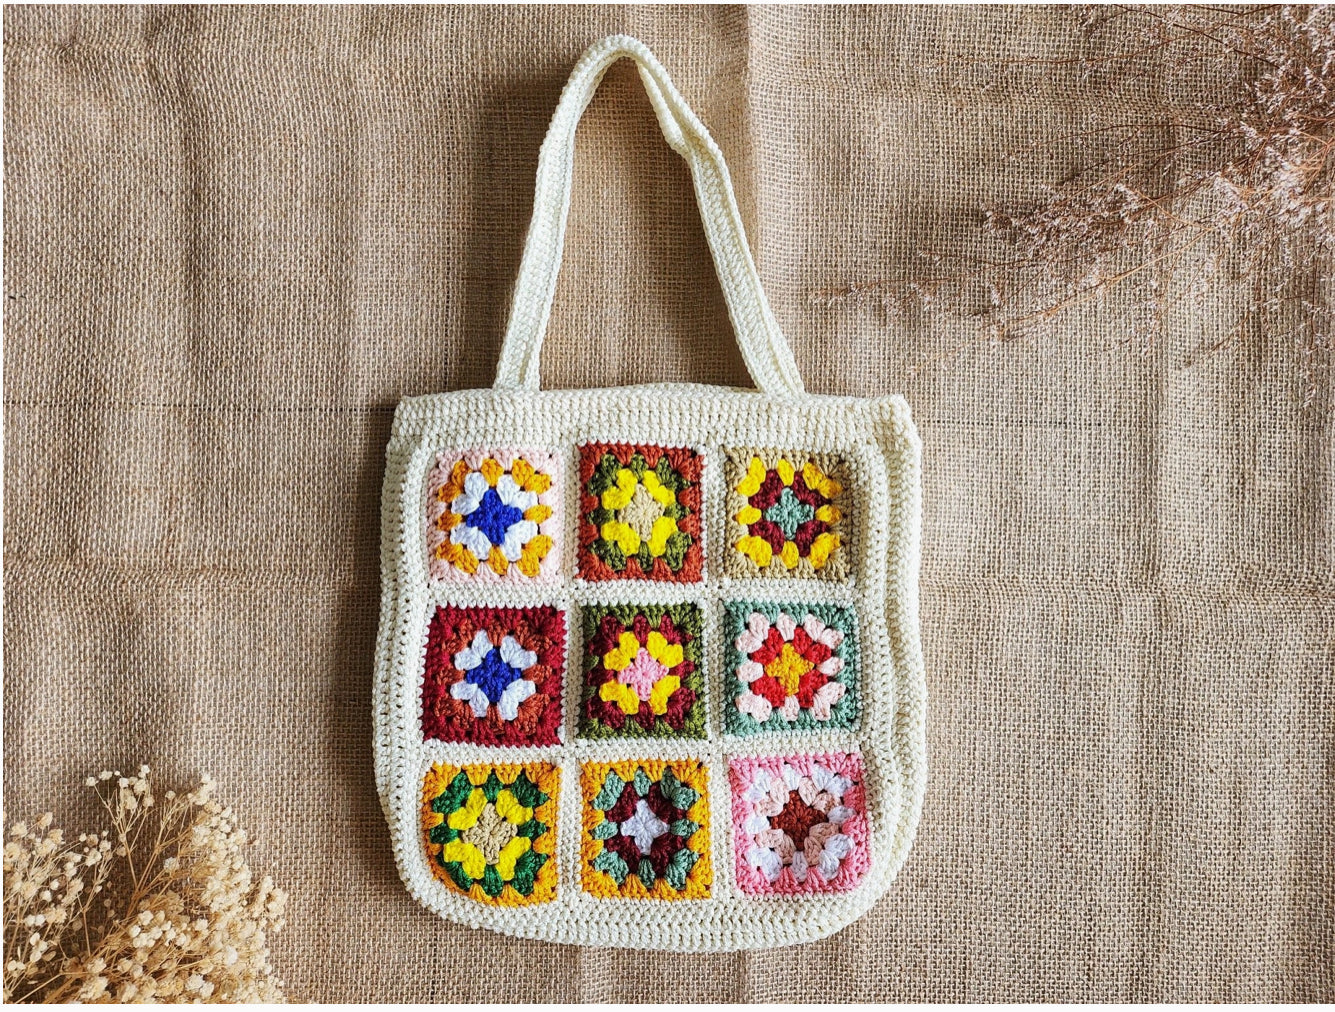 
  
  Hand Crochet Granny Square Bag
  
